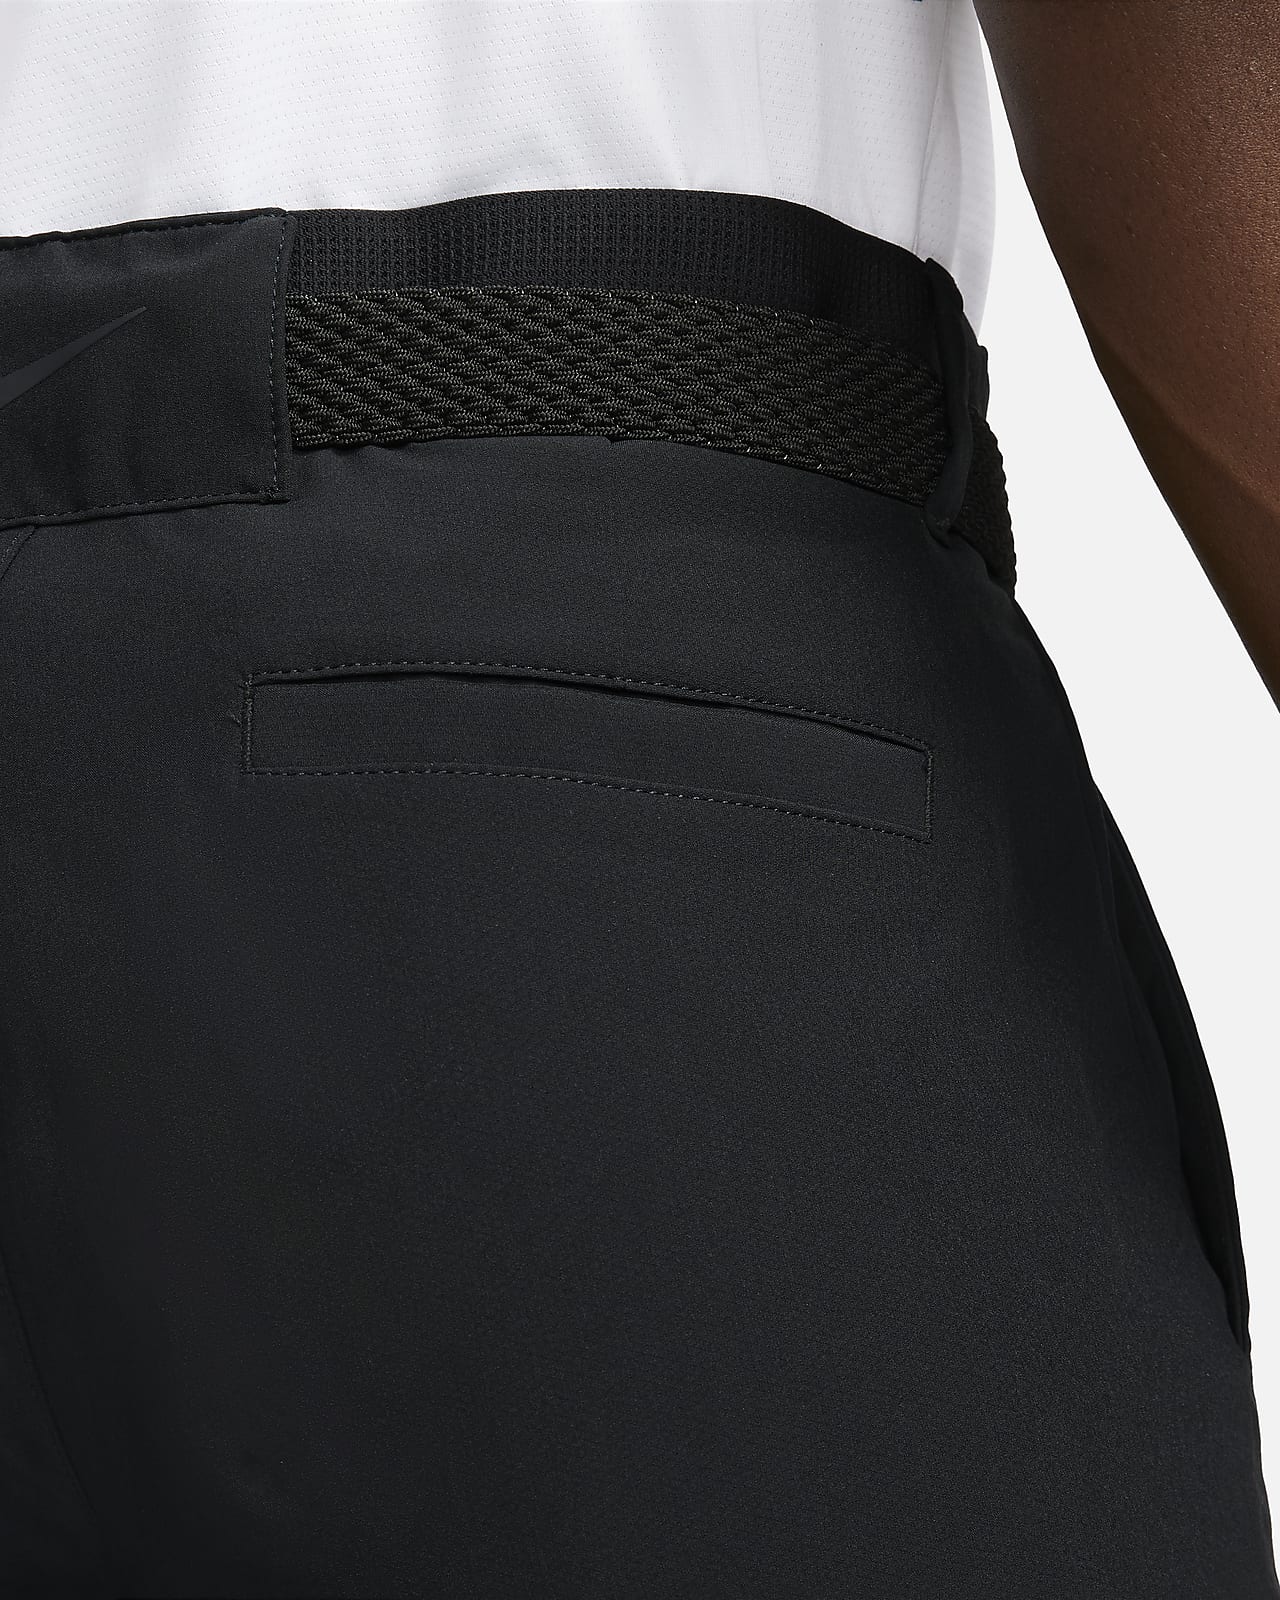 Nike Dri-FIT Vapor Men's Slim-Fit Golf Pants.